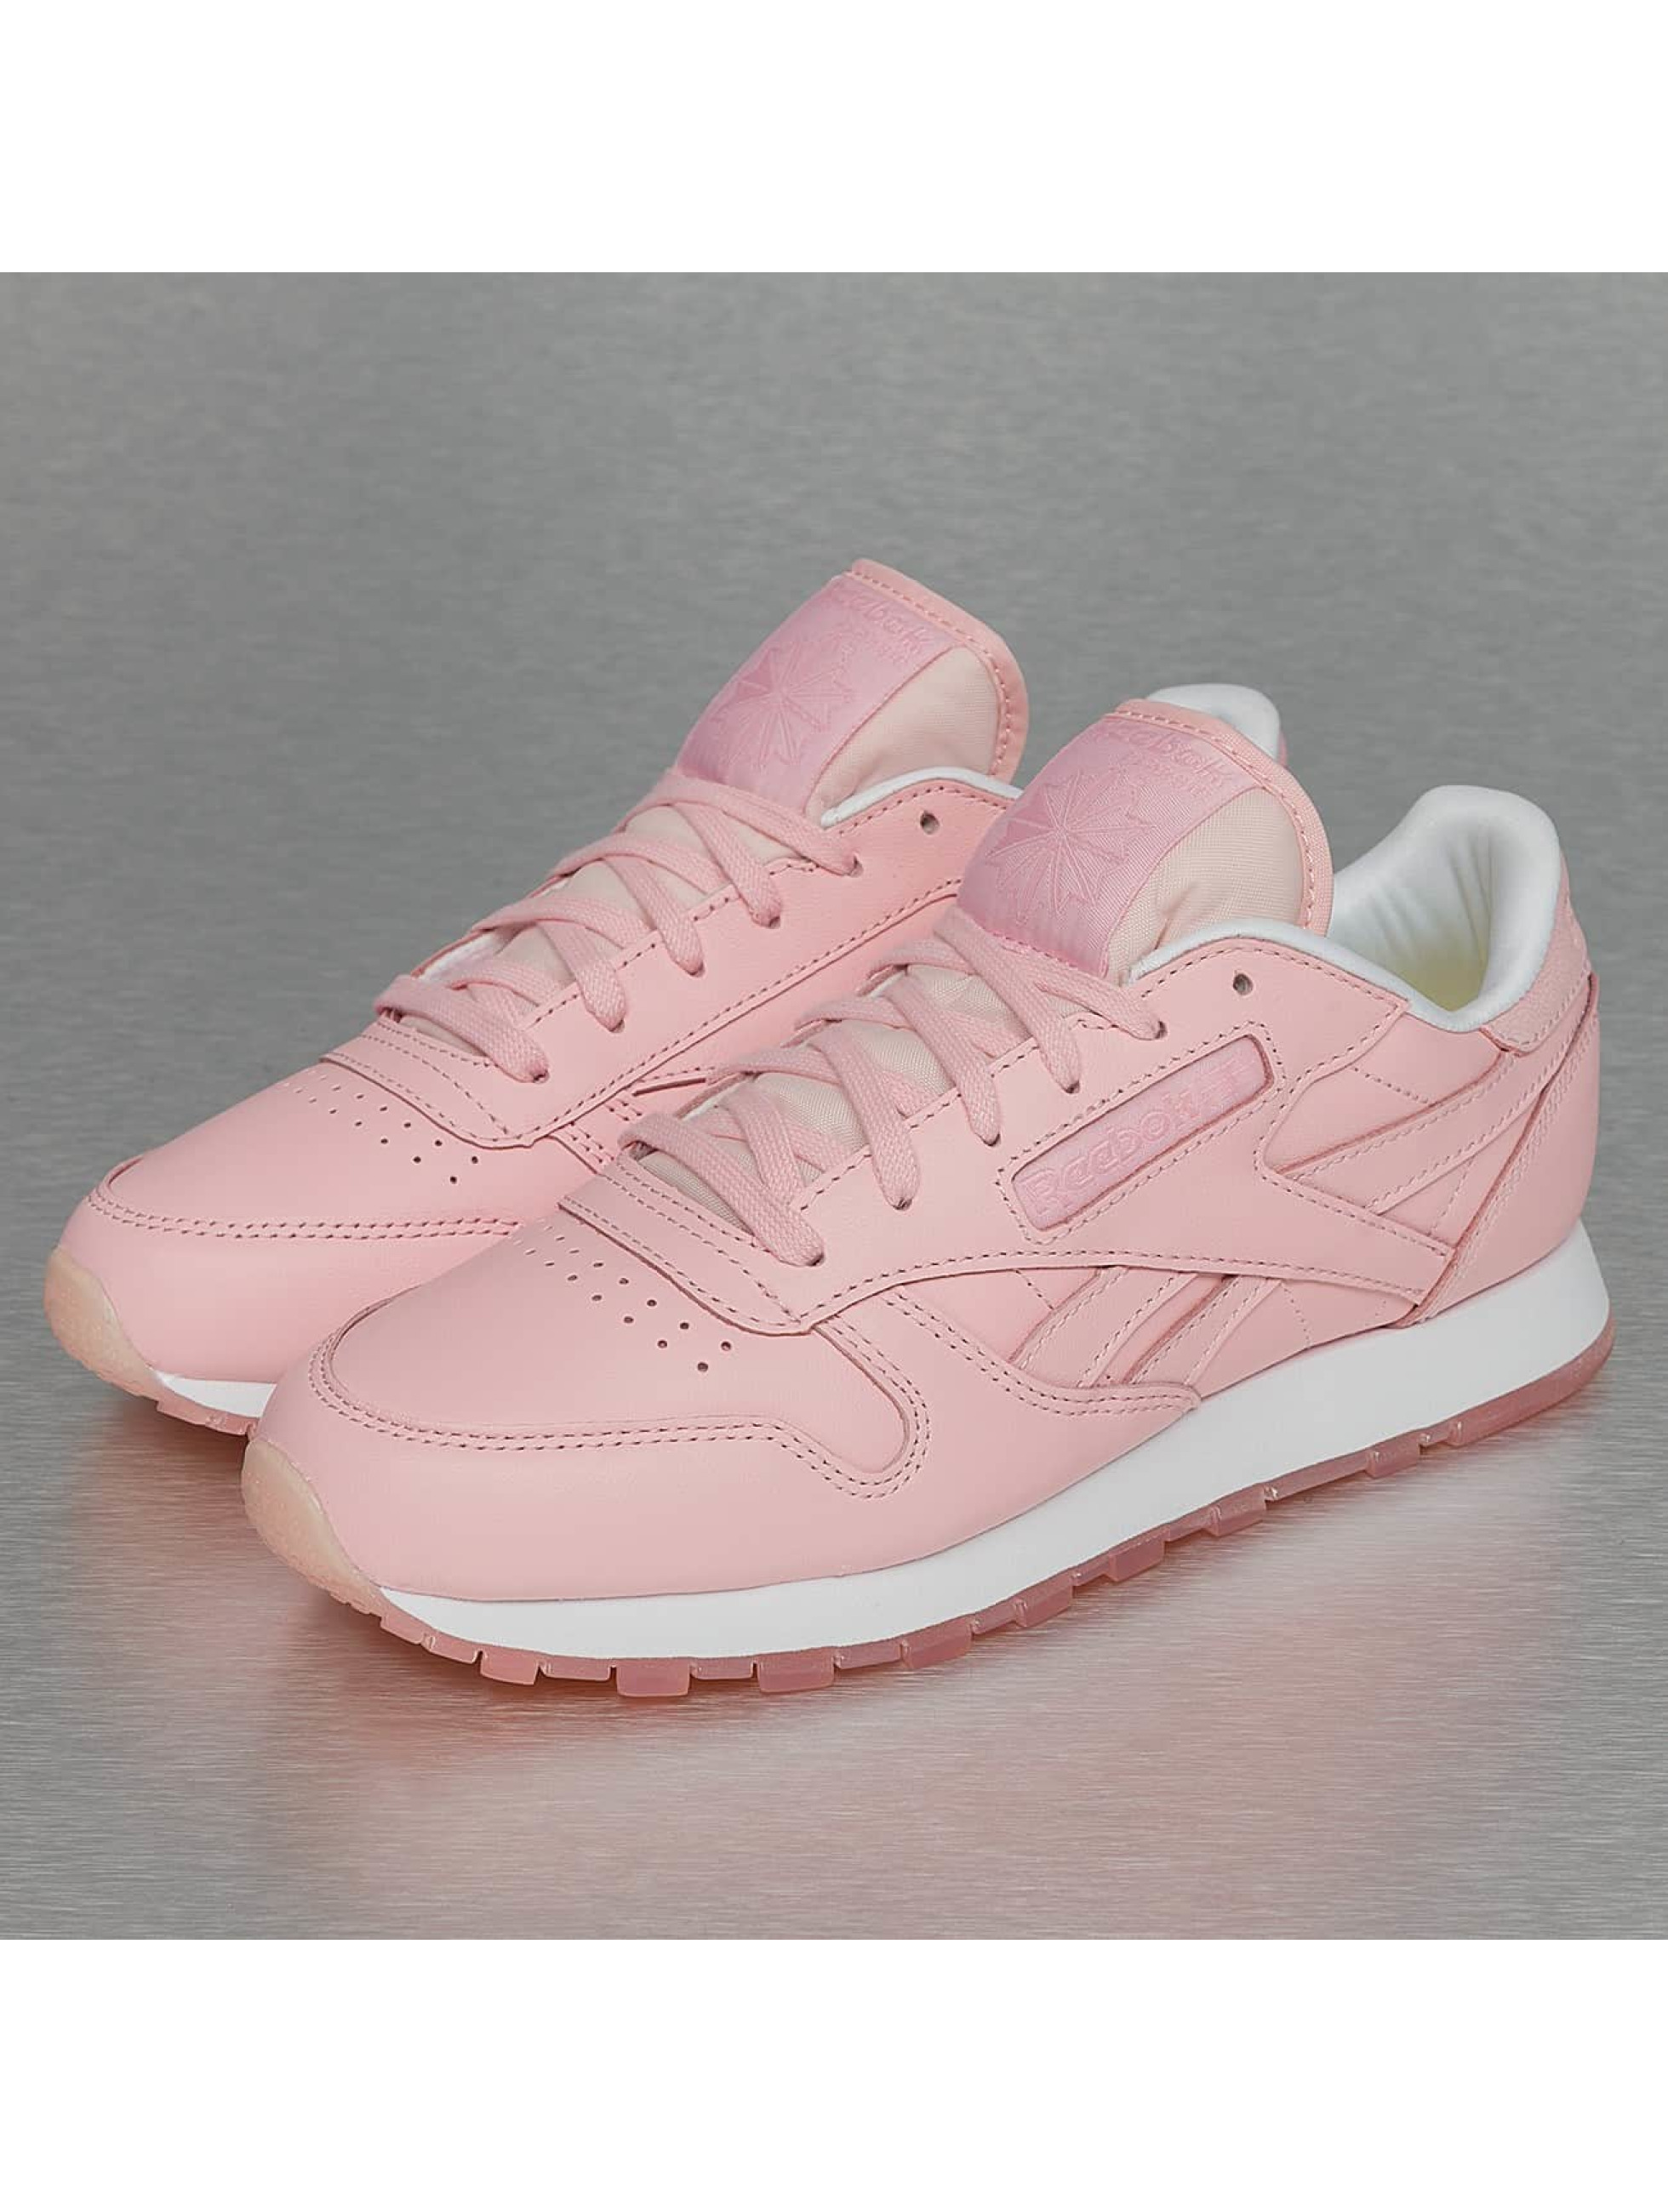 Reebok Chaussures / Baskets CL Leather Face en rose